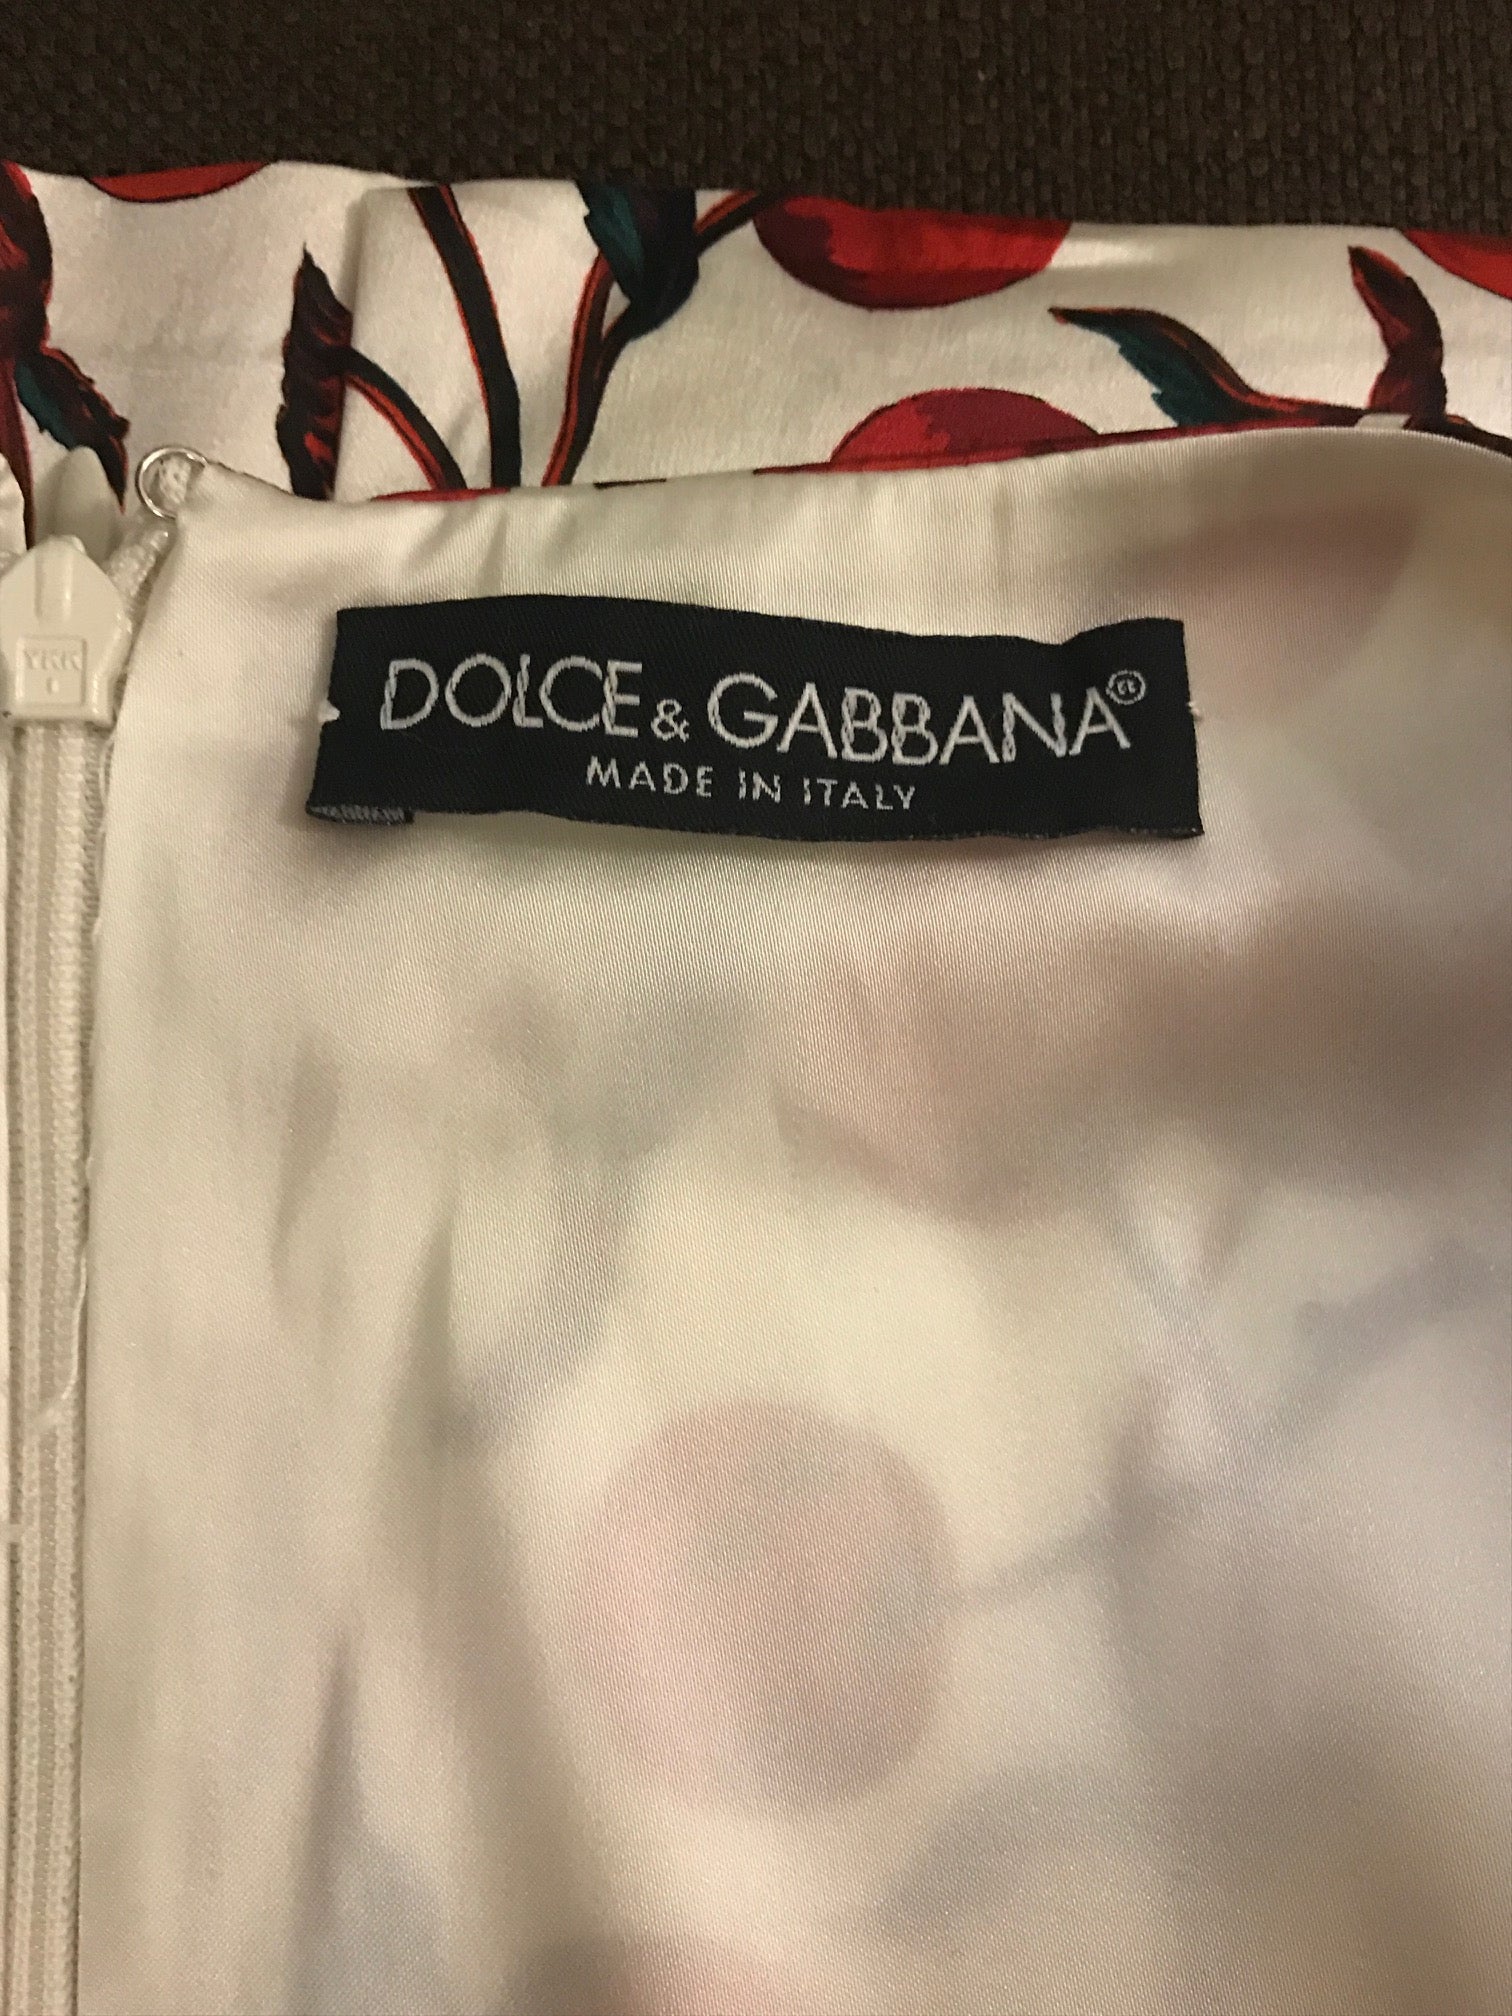 dolce and gabbana cherry print dress